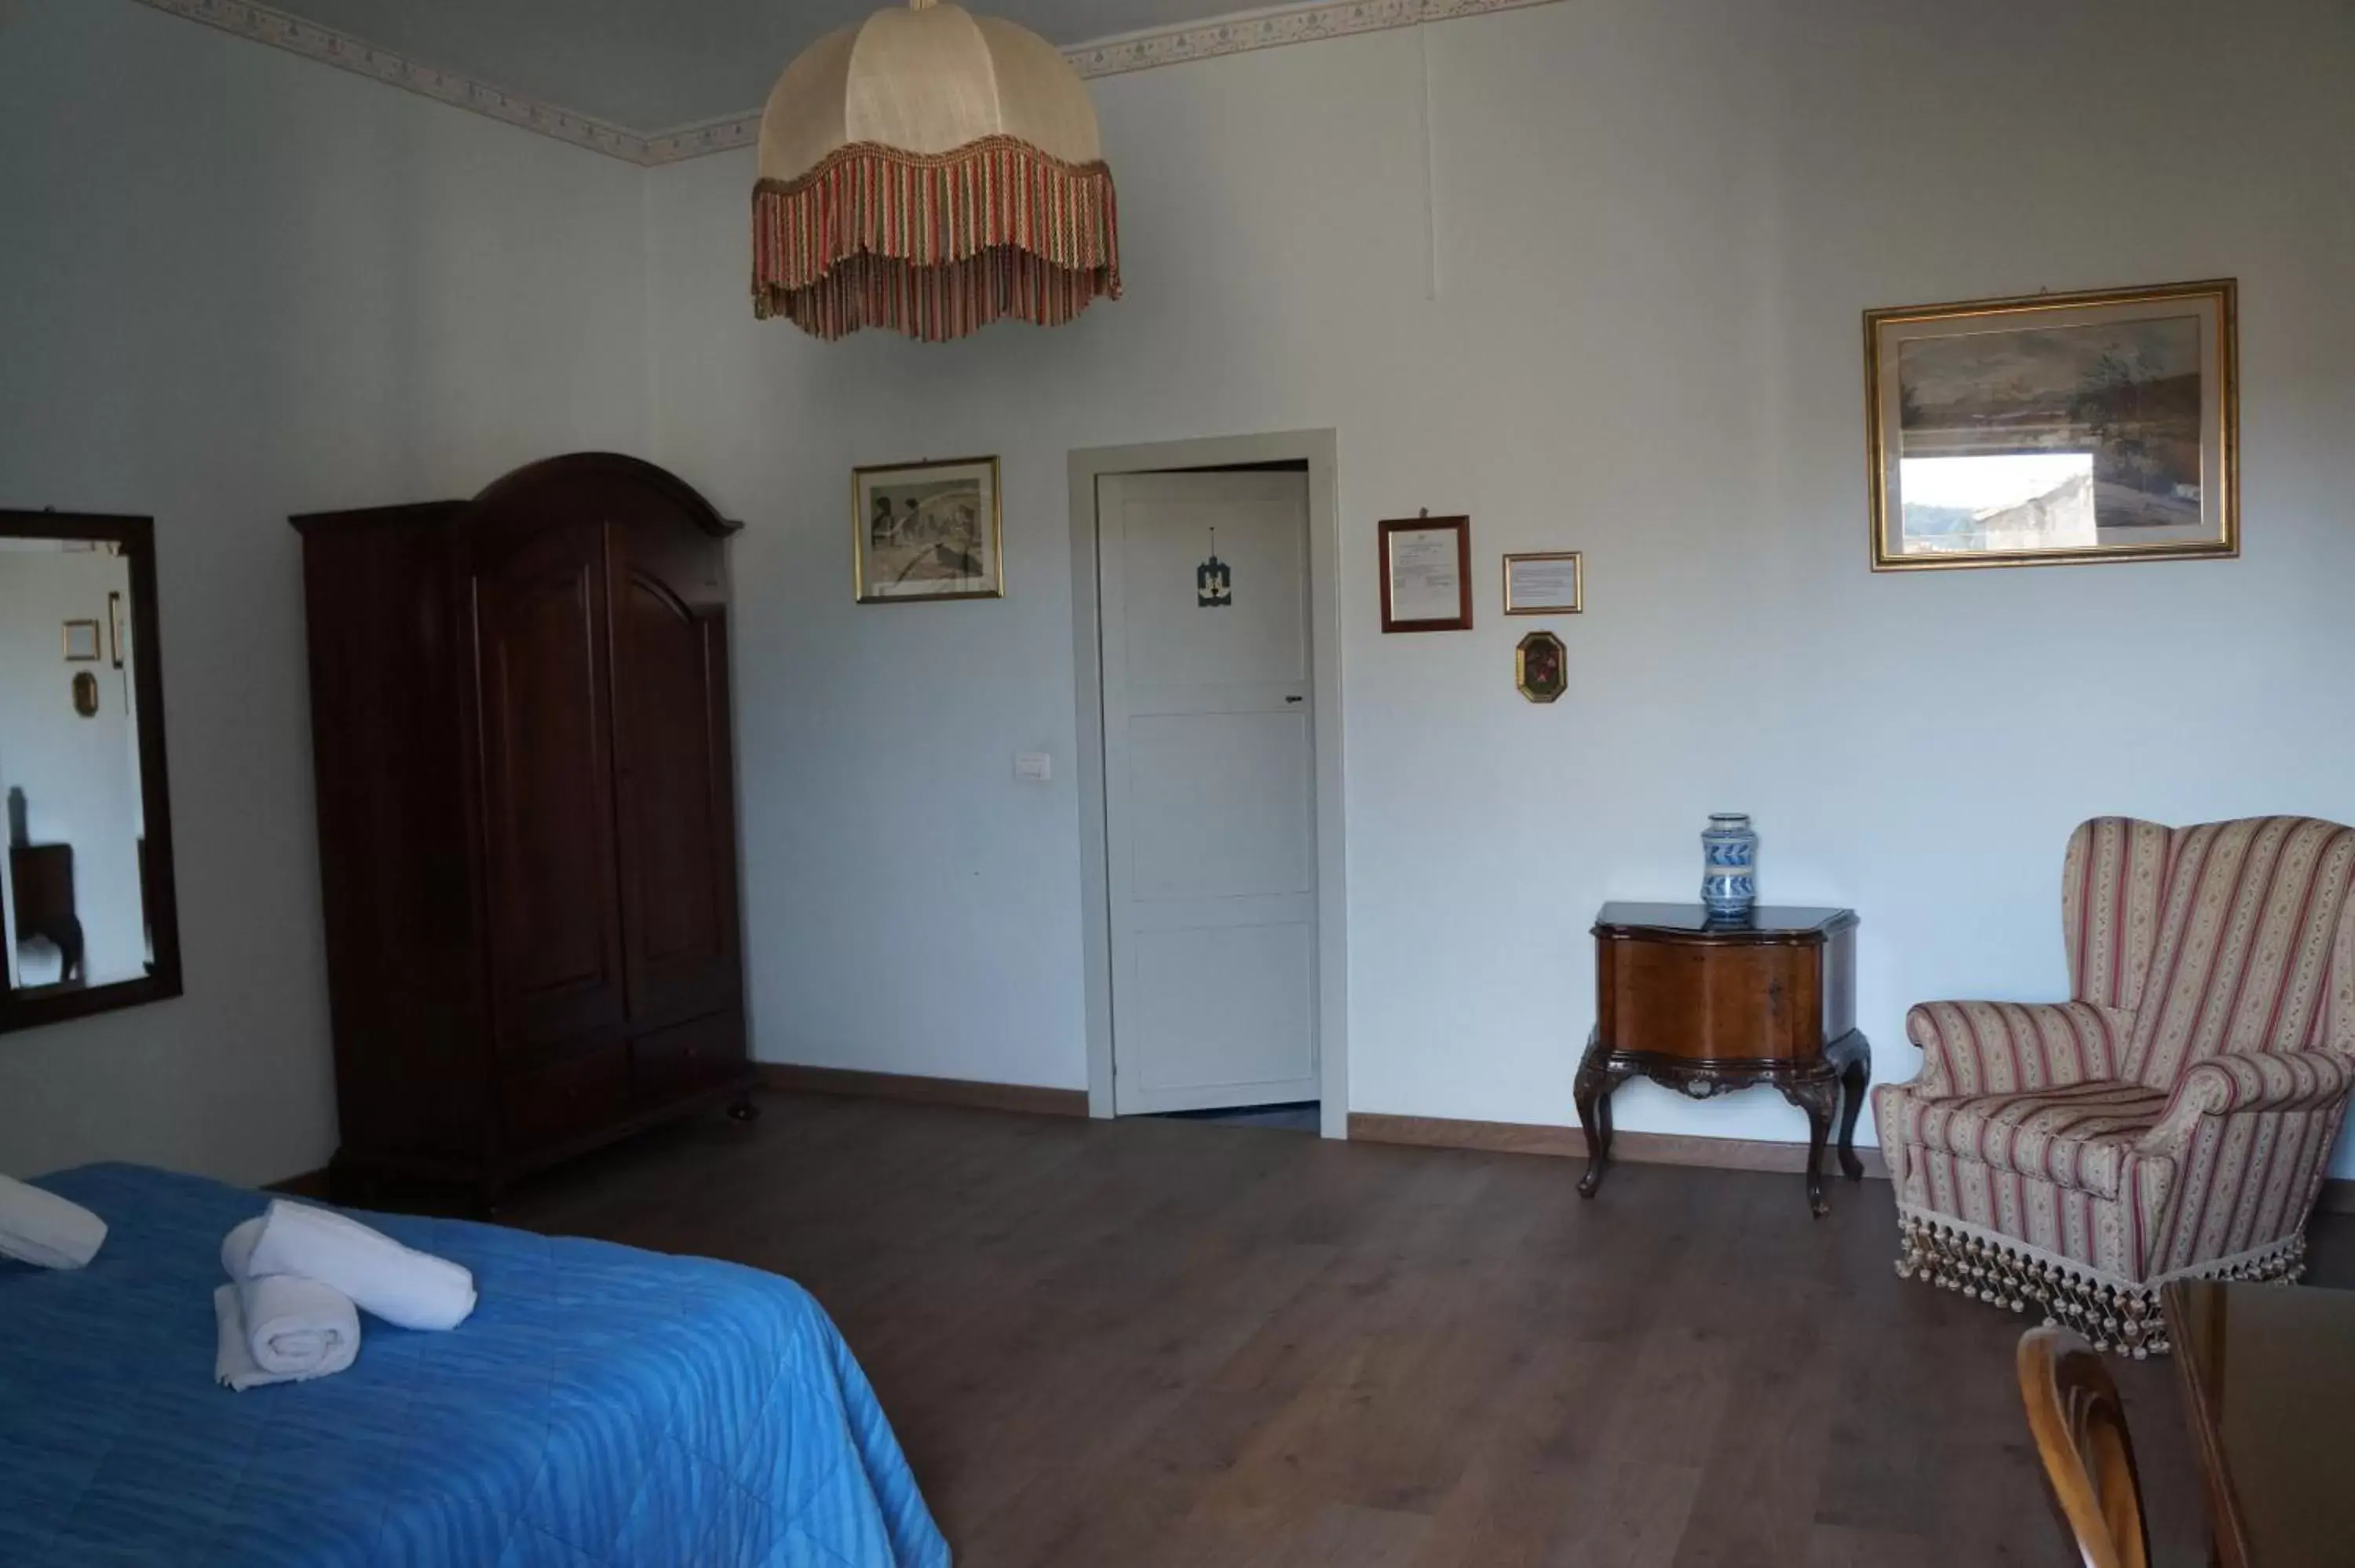 Bedroom, Room Photo in Risveglio Ibleo